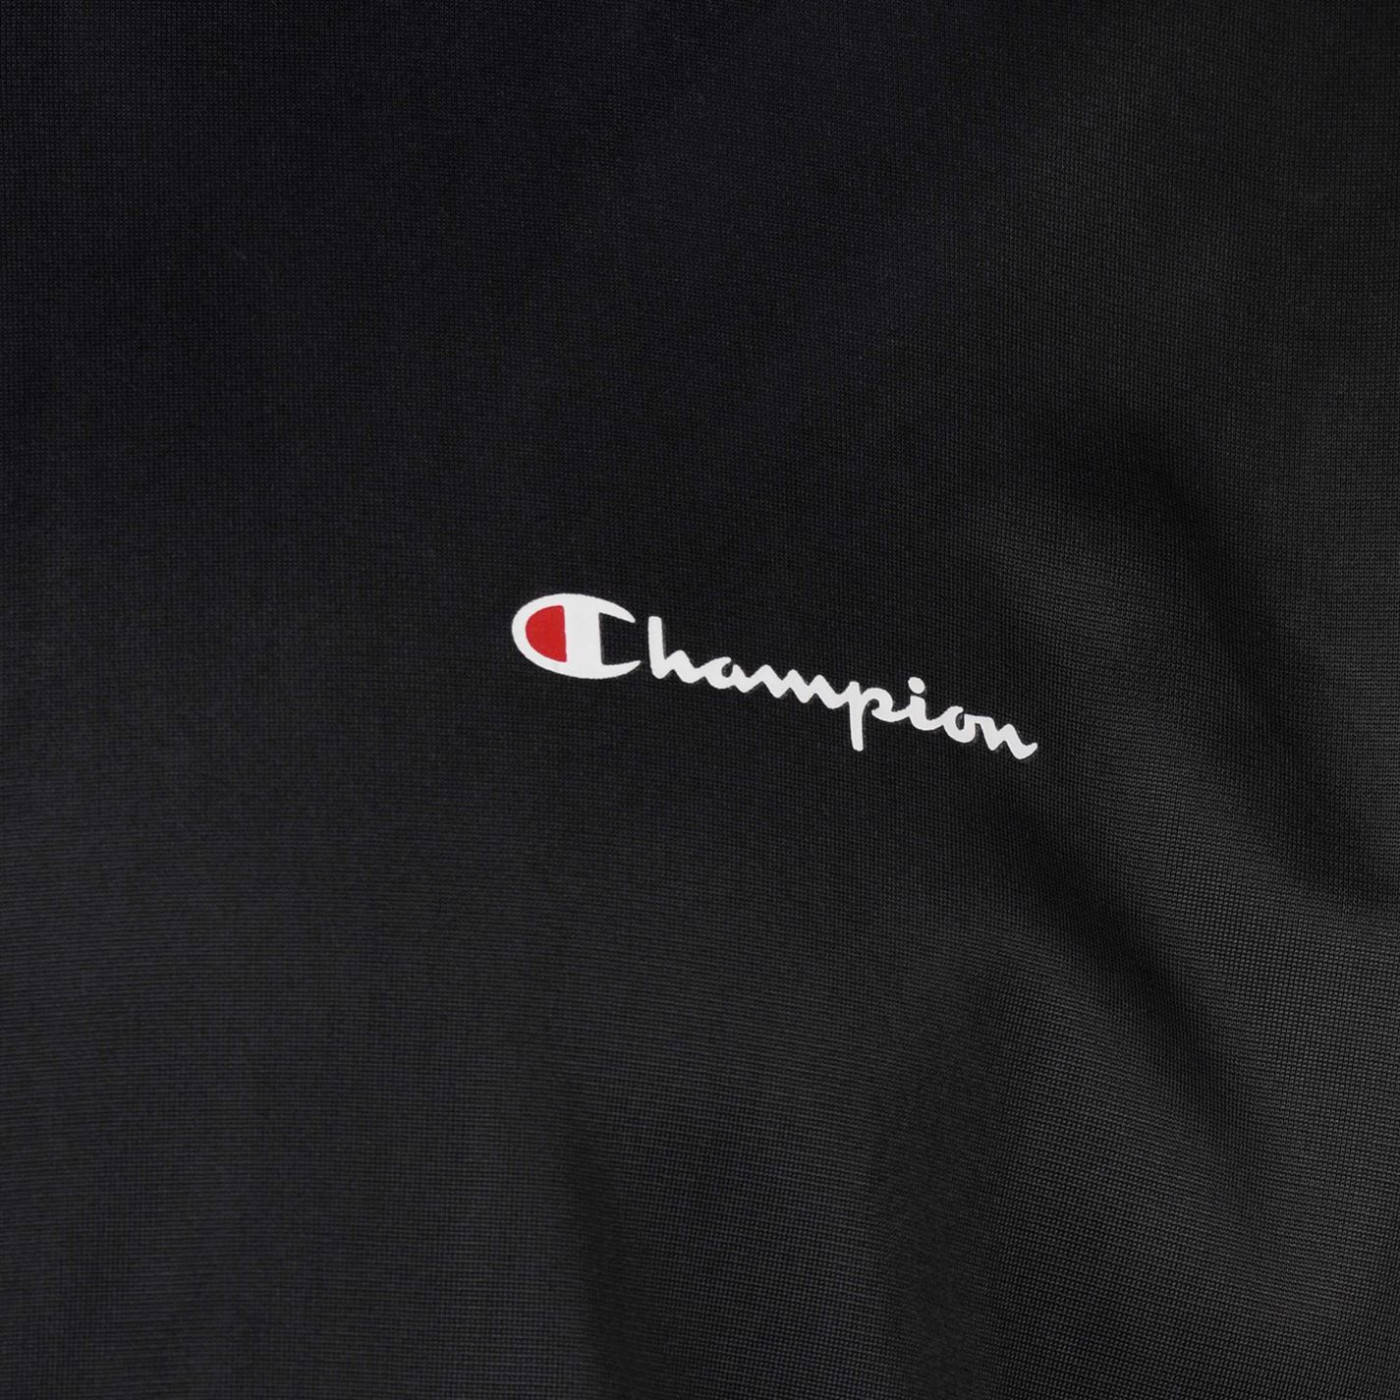 Minimalistic Champion Logo Wallpaper